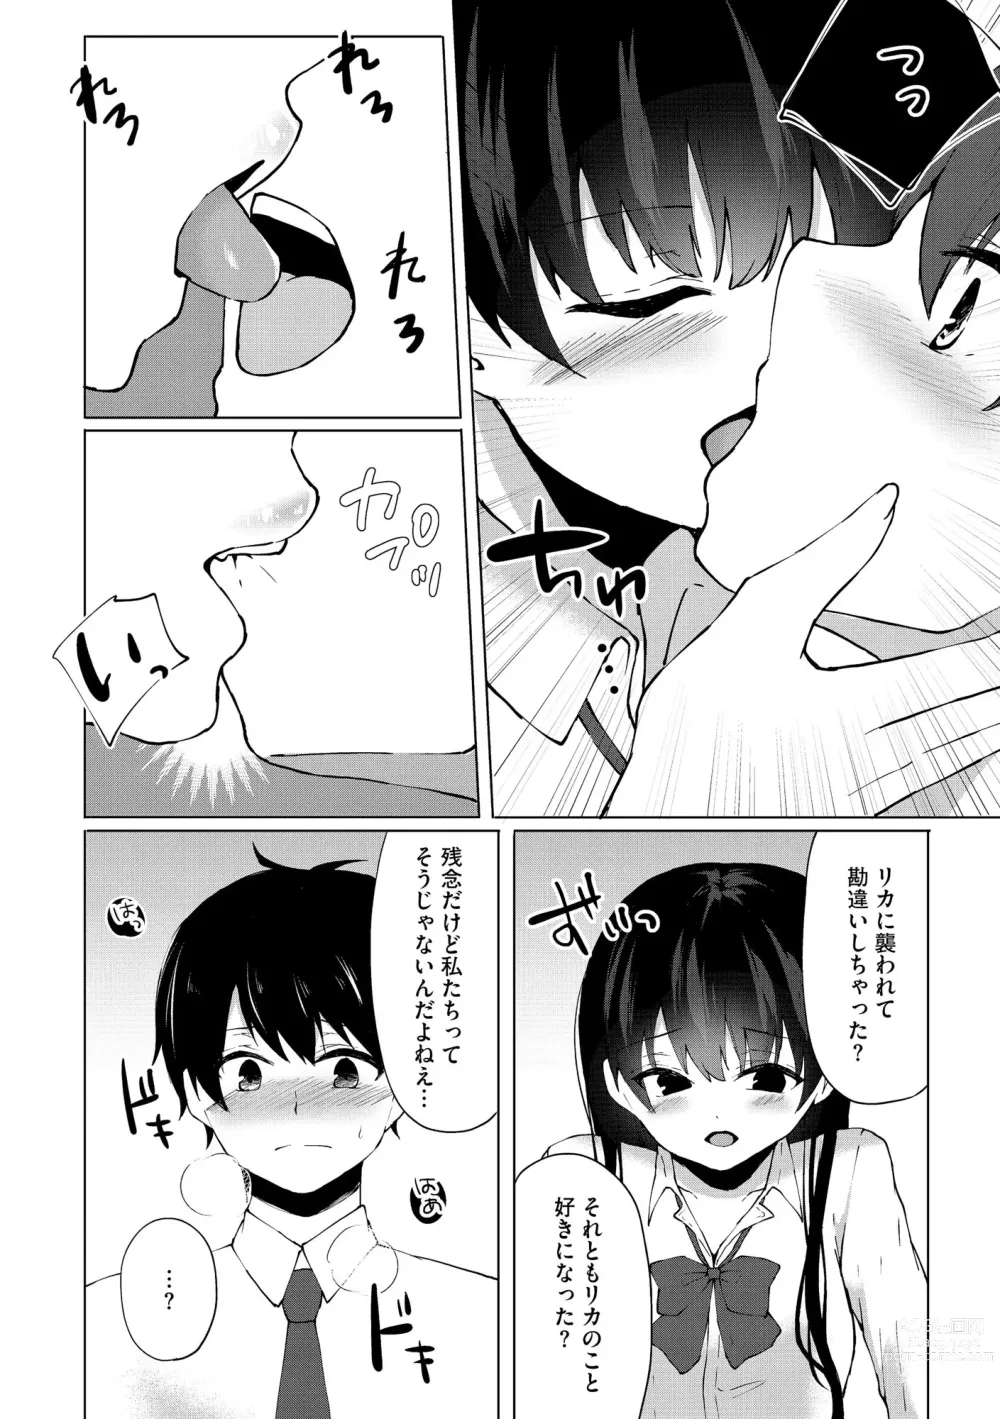 Page 12 of manga Cyberia Plus Vol. 12